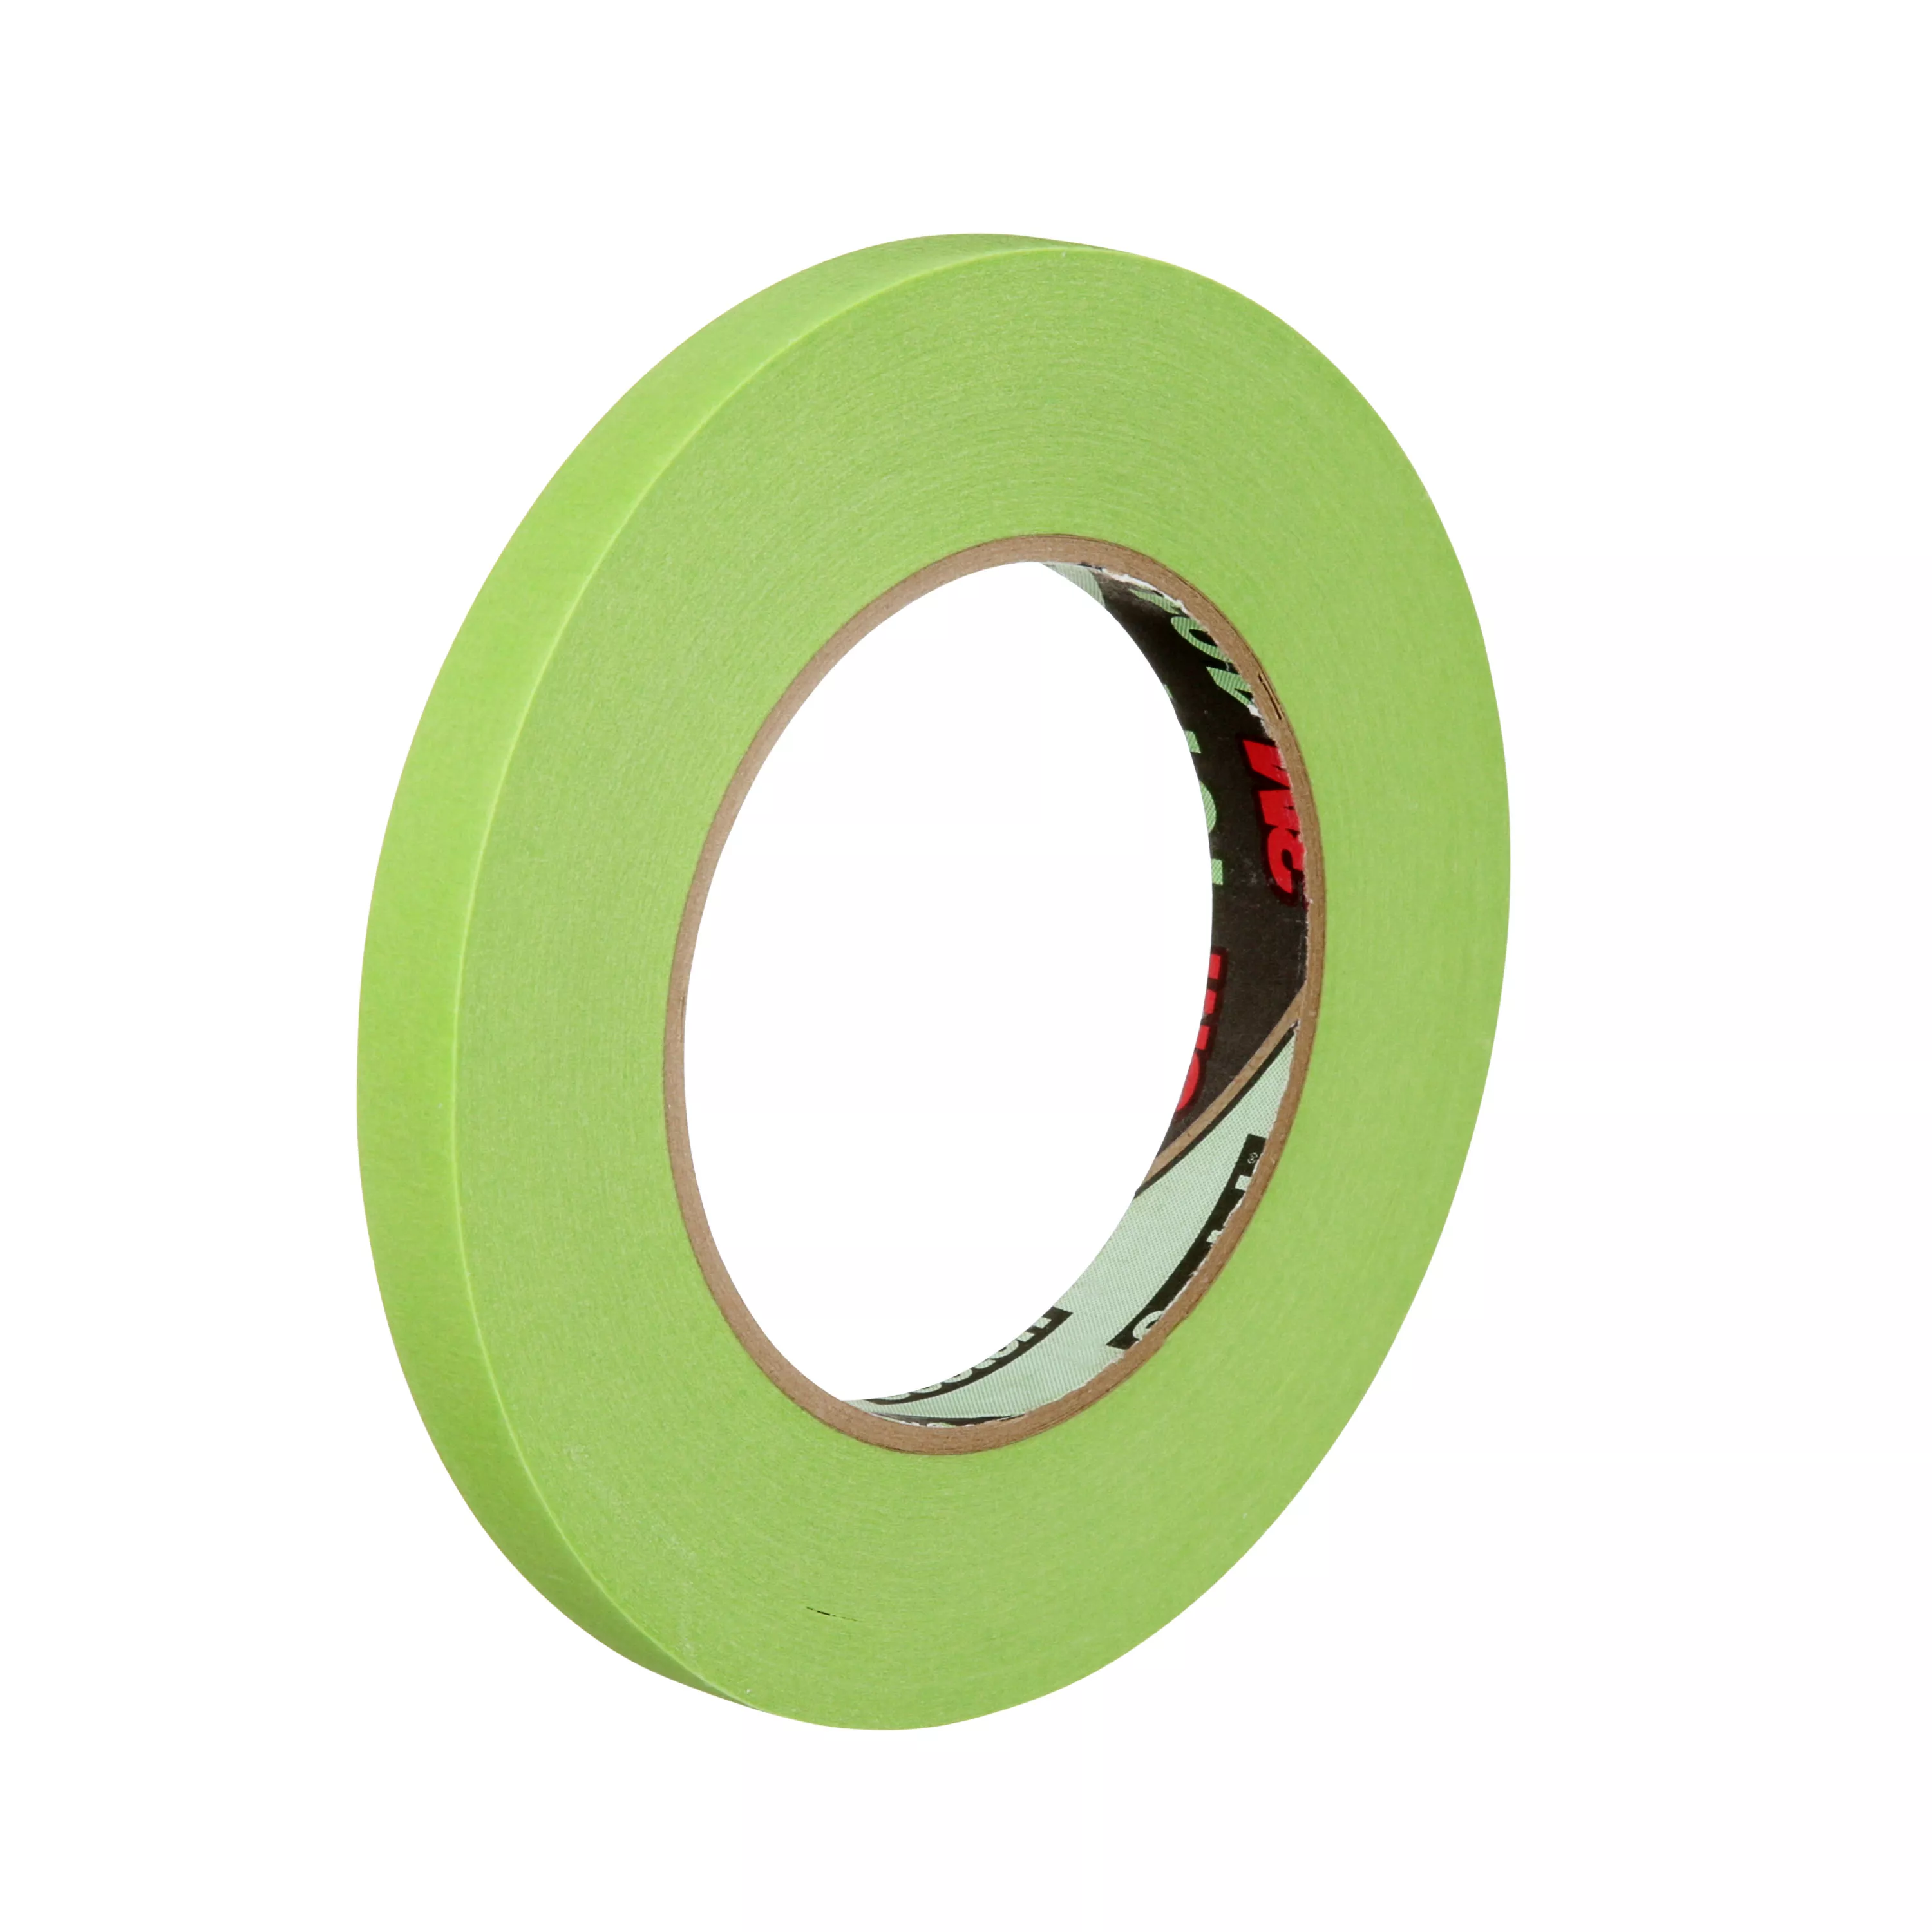 3M™ High Performance Green Masking Tape 401+, 12 mm x 55 m 6.7 mil, 48
Roll/Case